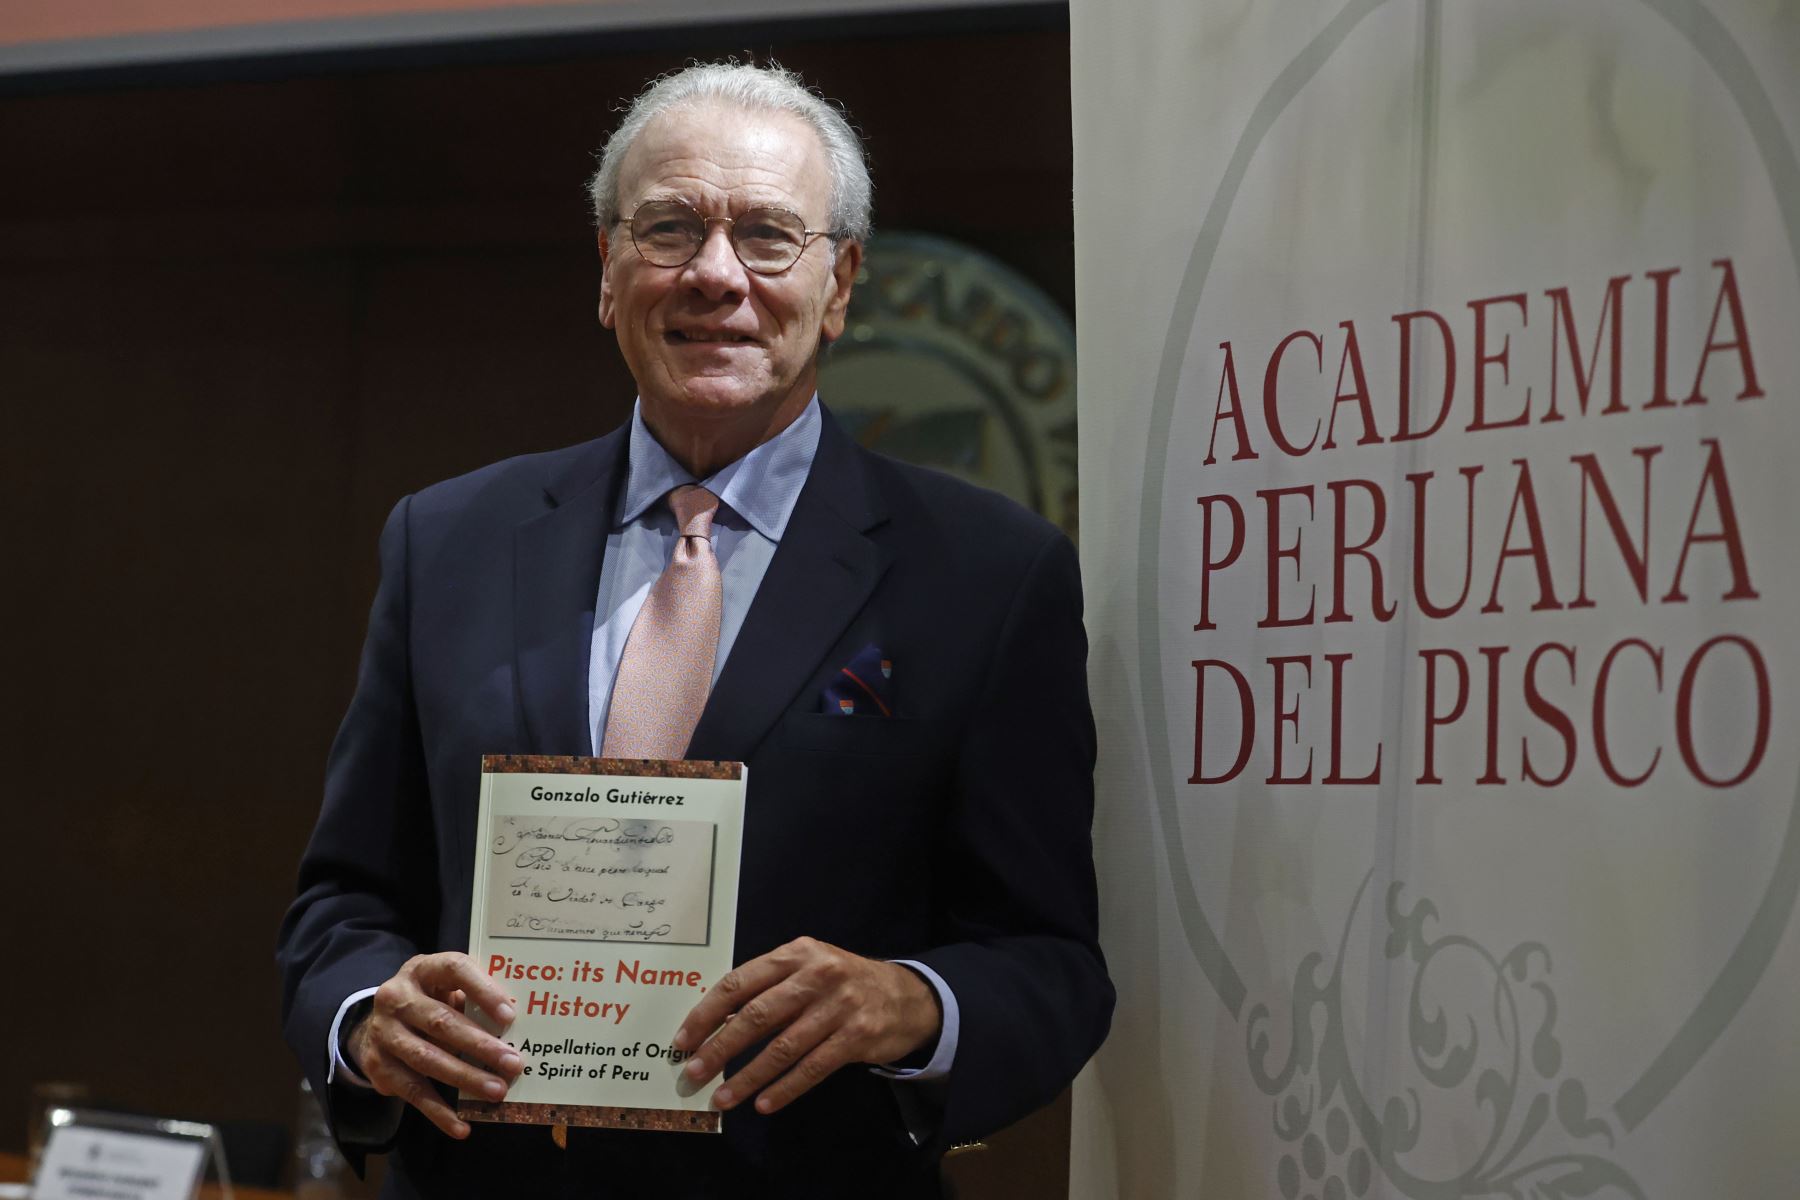 El libro “Pisco: its Name, its History”, del embajador Gonzalo Gutiérrez, es un nuevo aporte a la defensa de la peruanidad del pisco. Foto: ANDINA/Vidal Tarqui